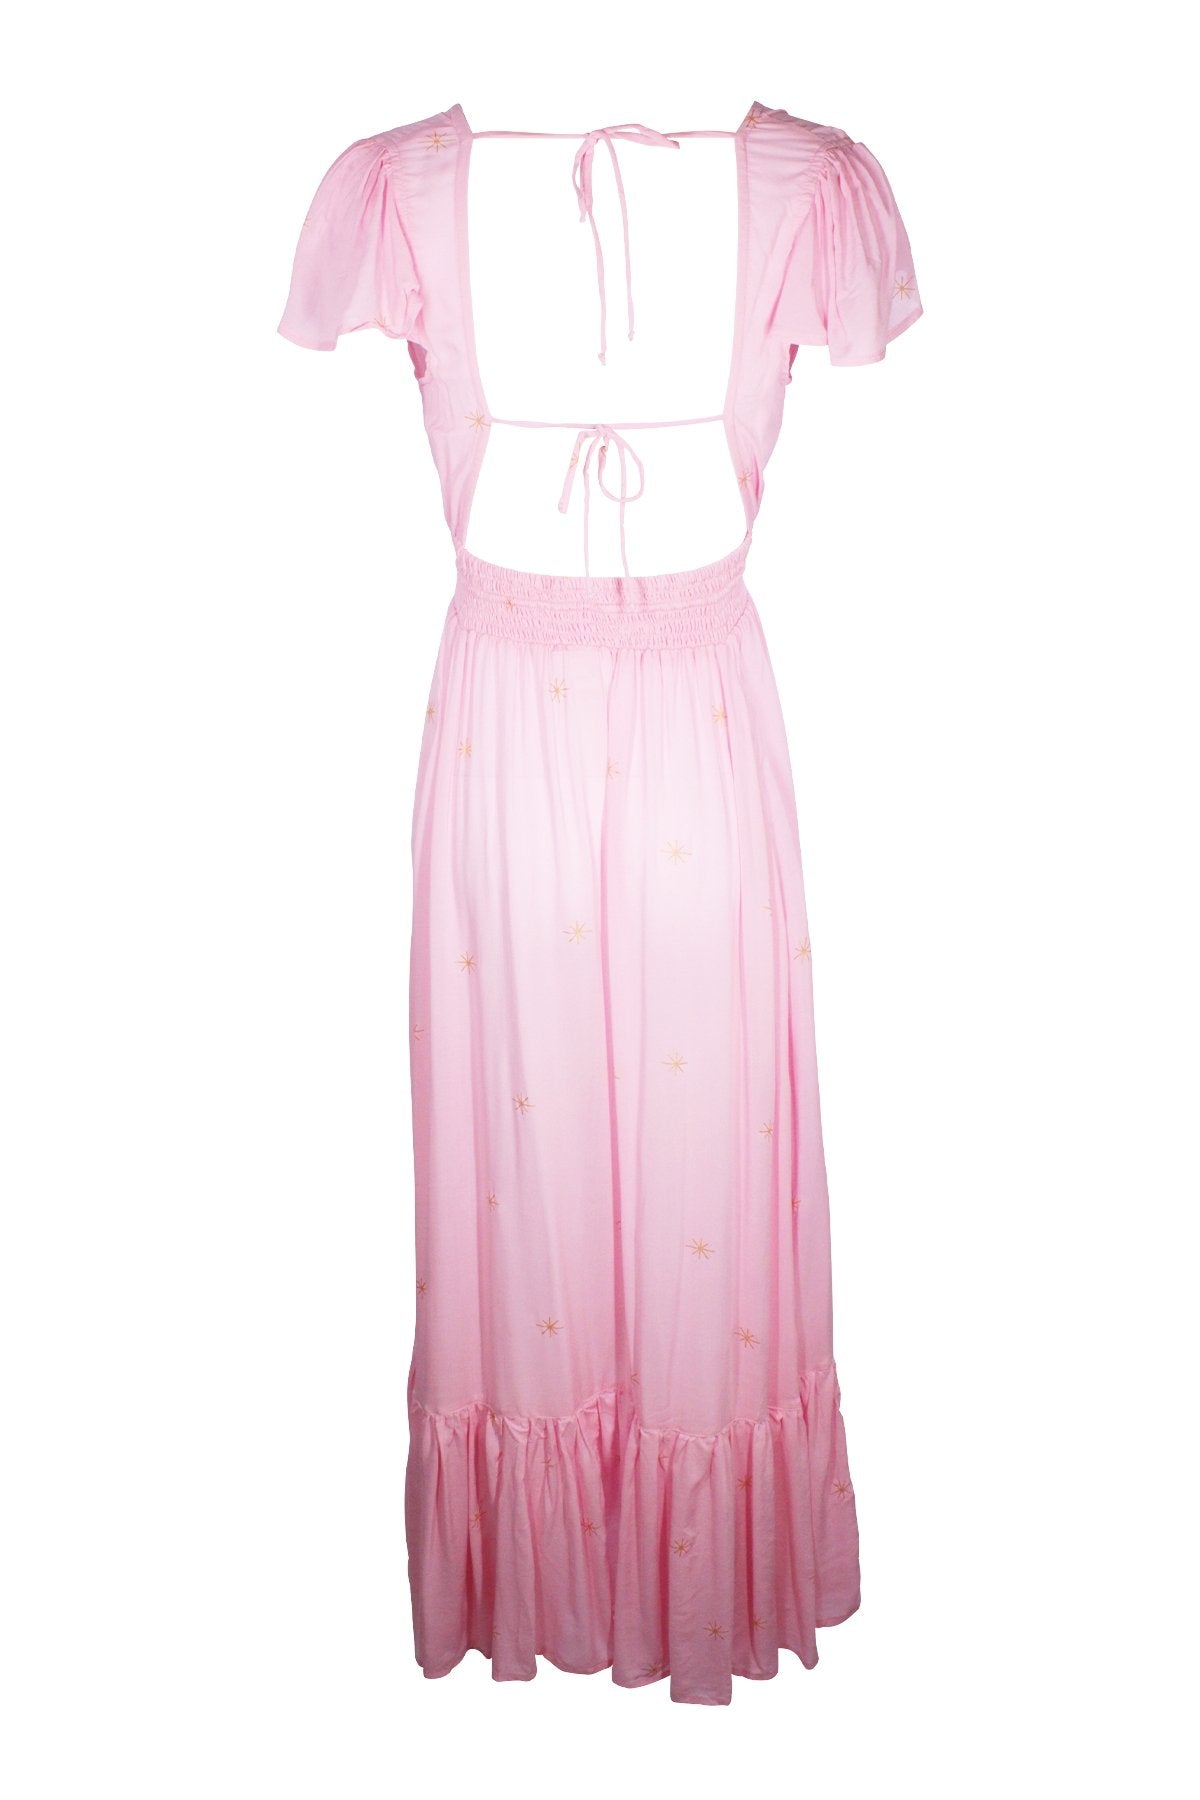 Mia Dress in Pink - shop-olivia.com